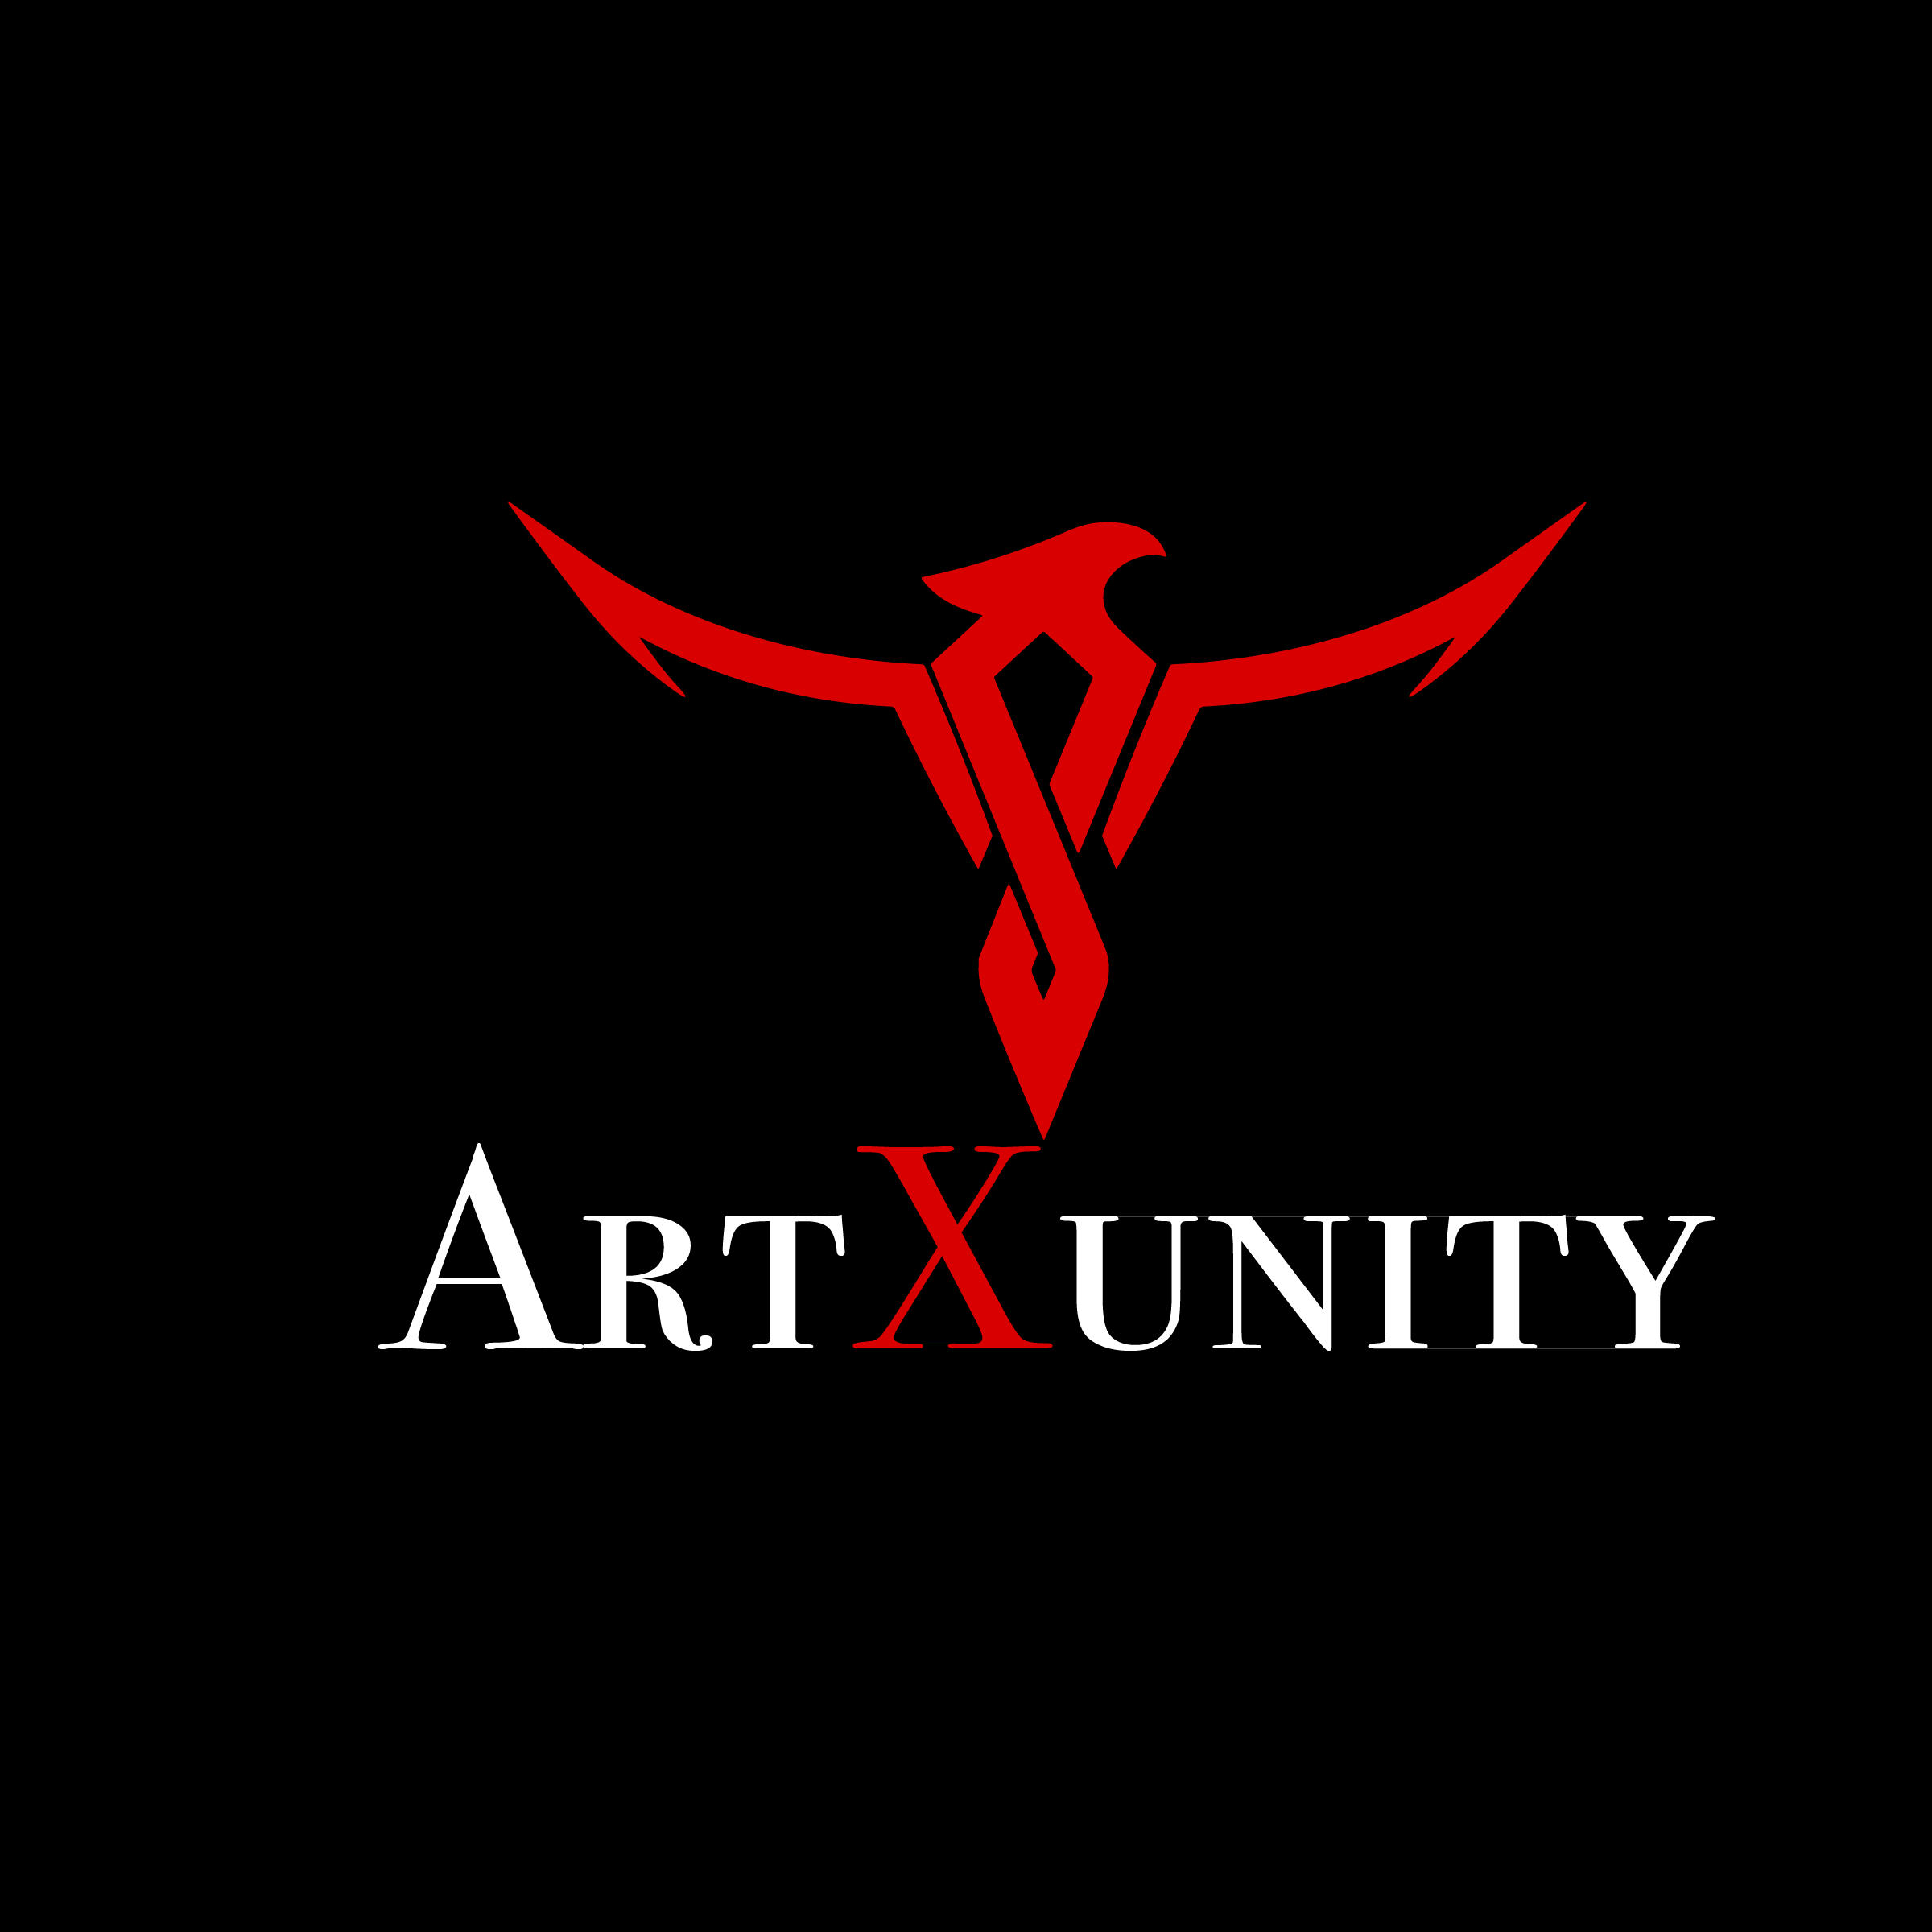 ArtXunity